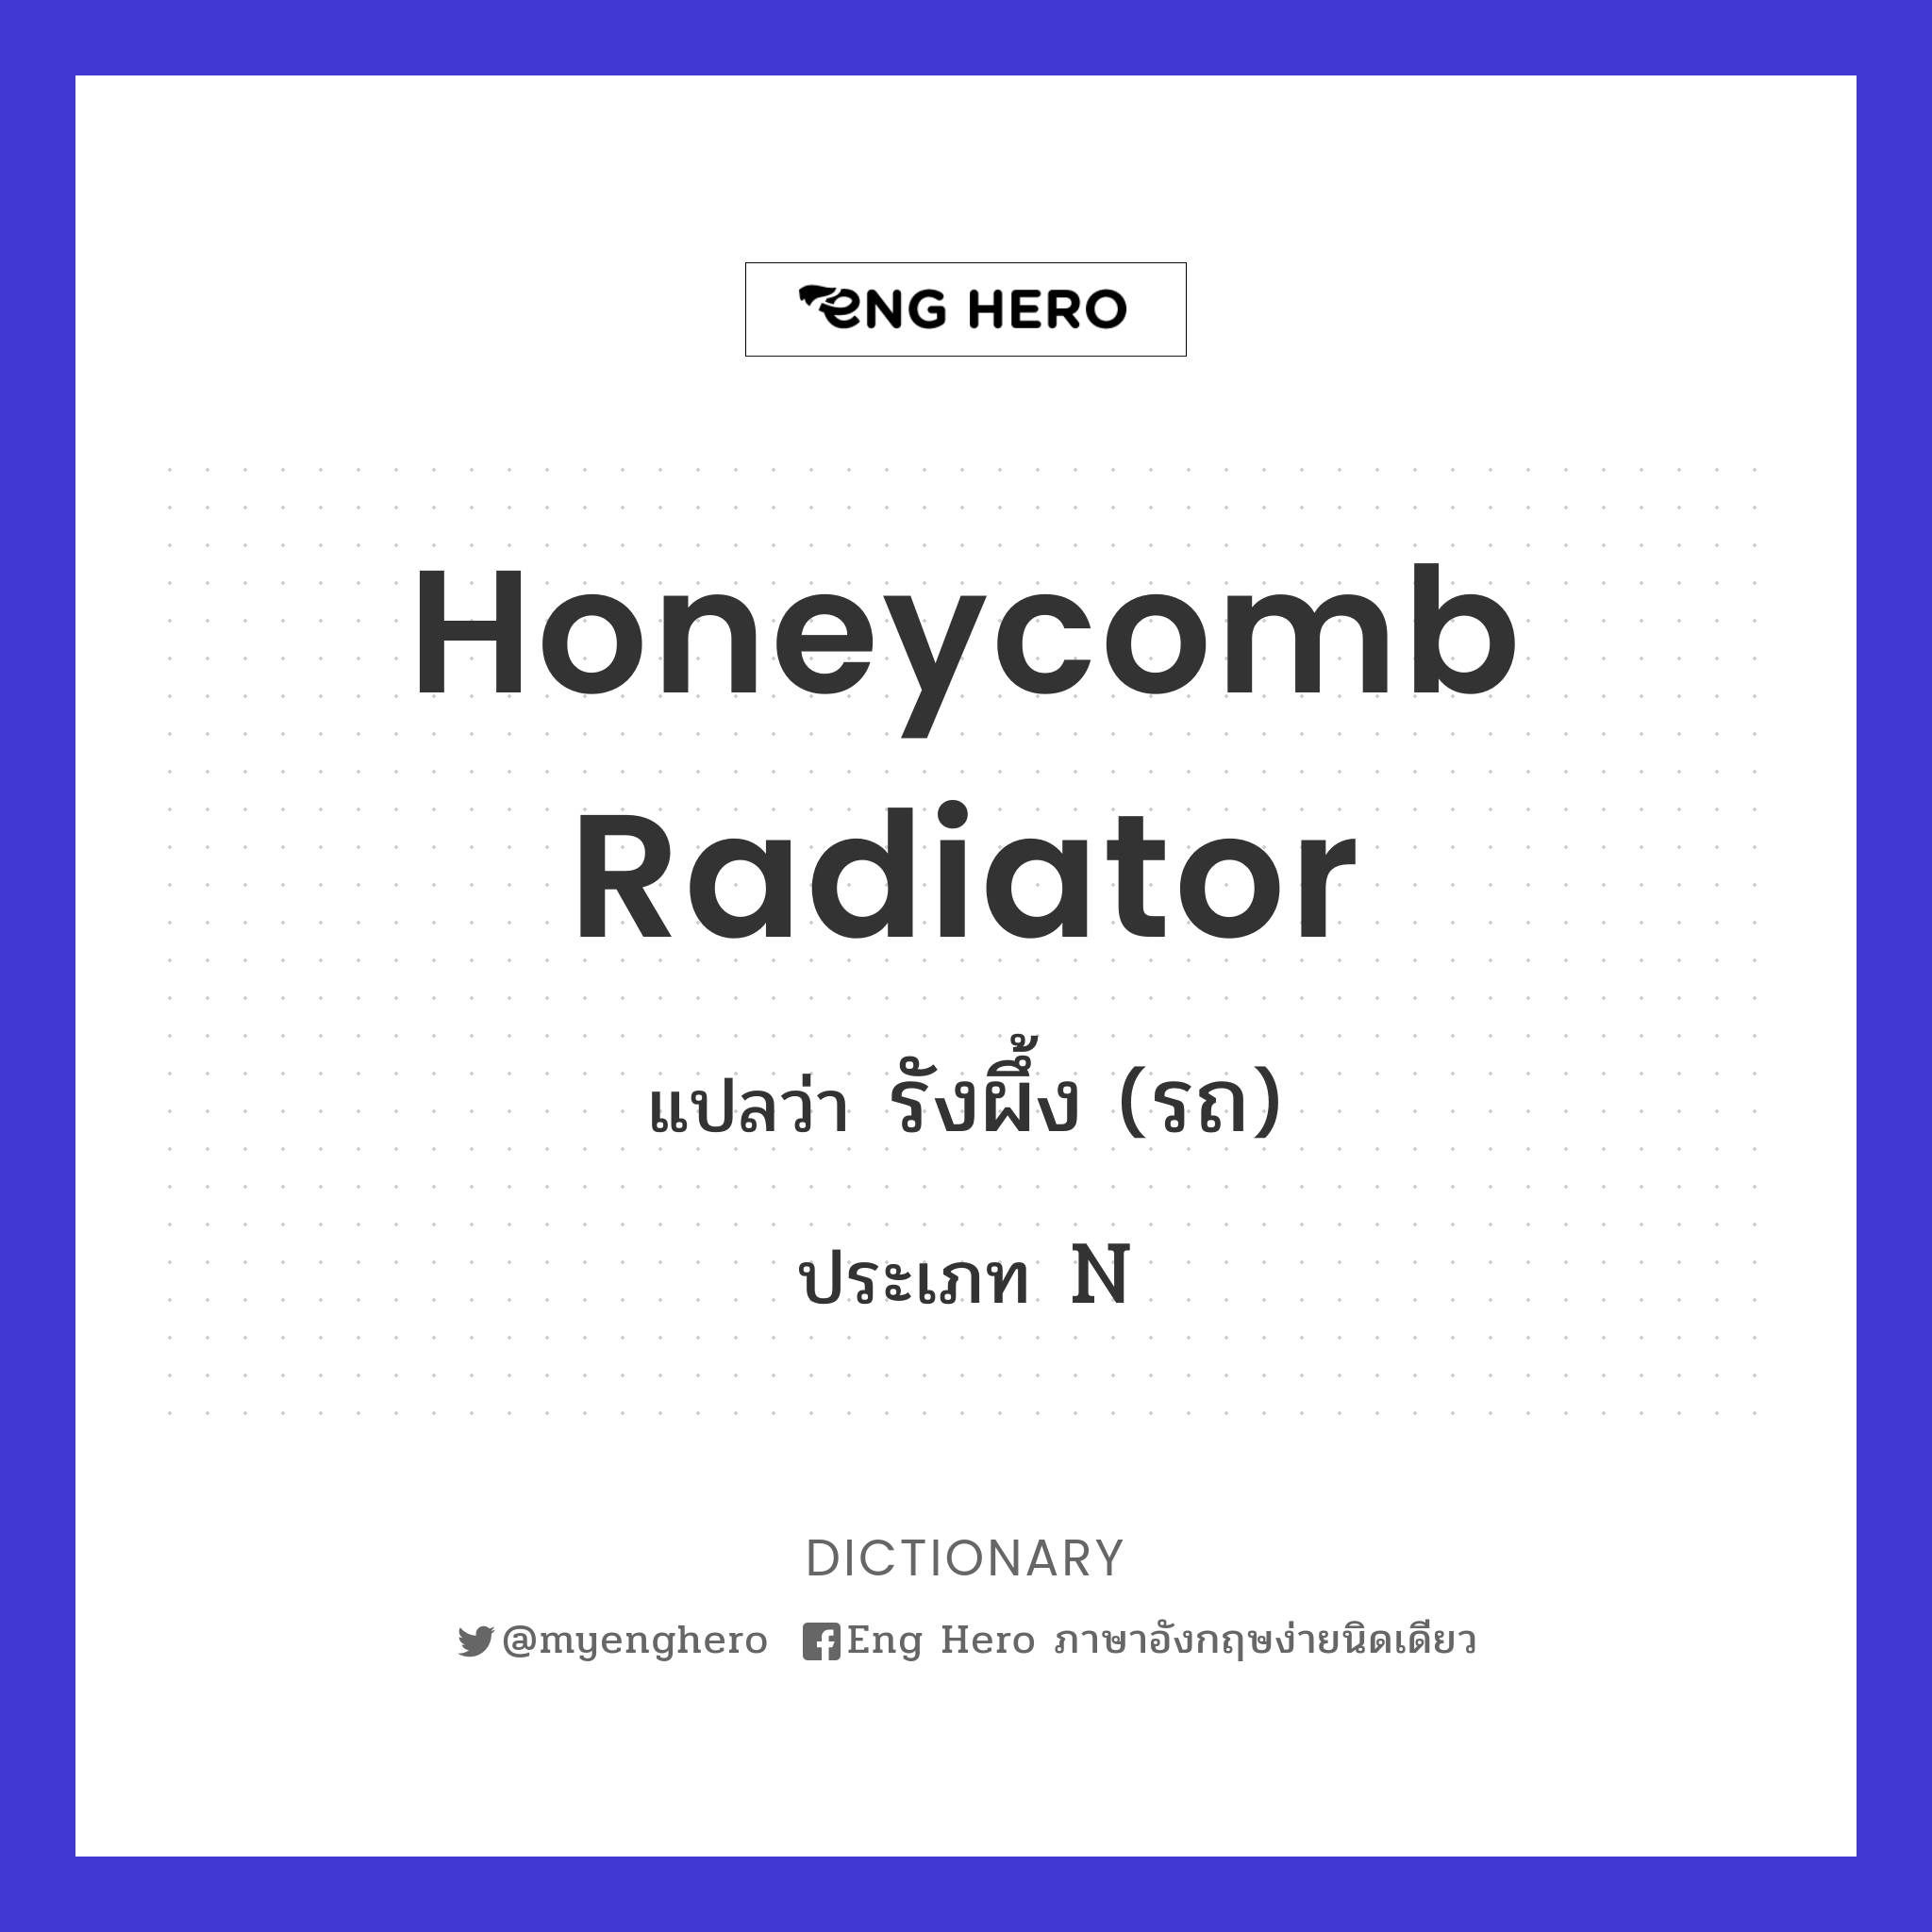 honeycomb radiator